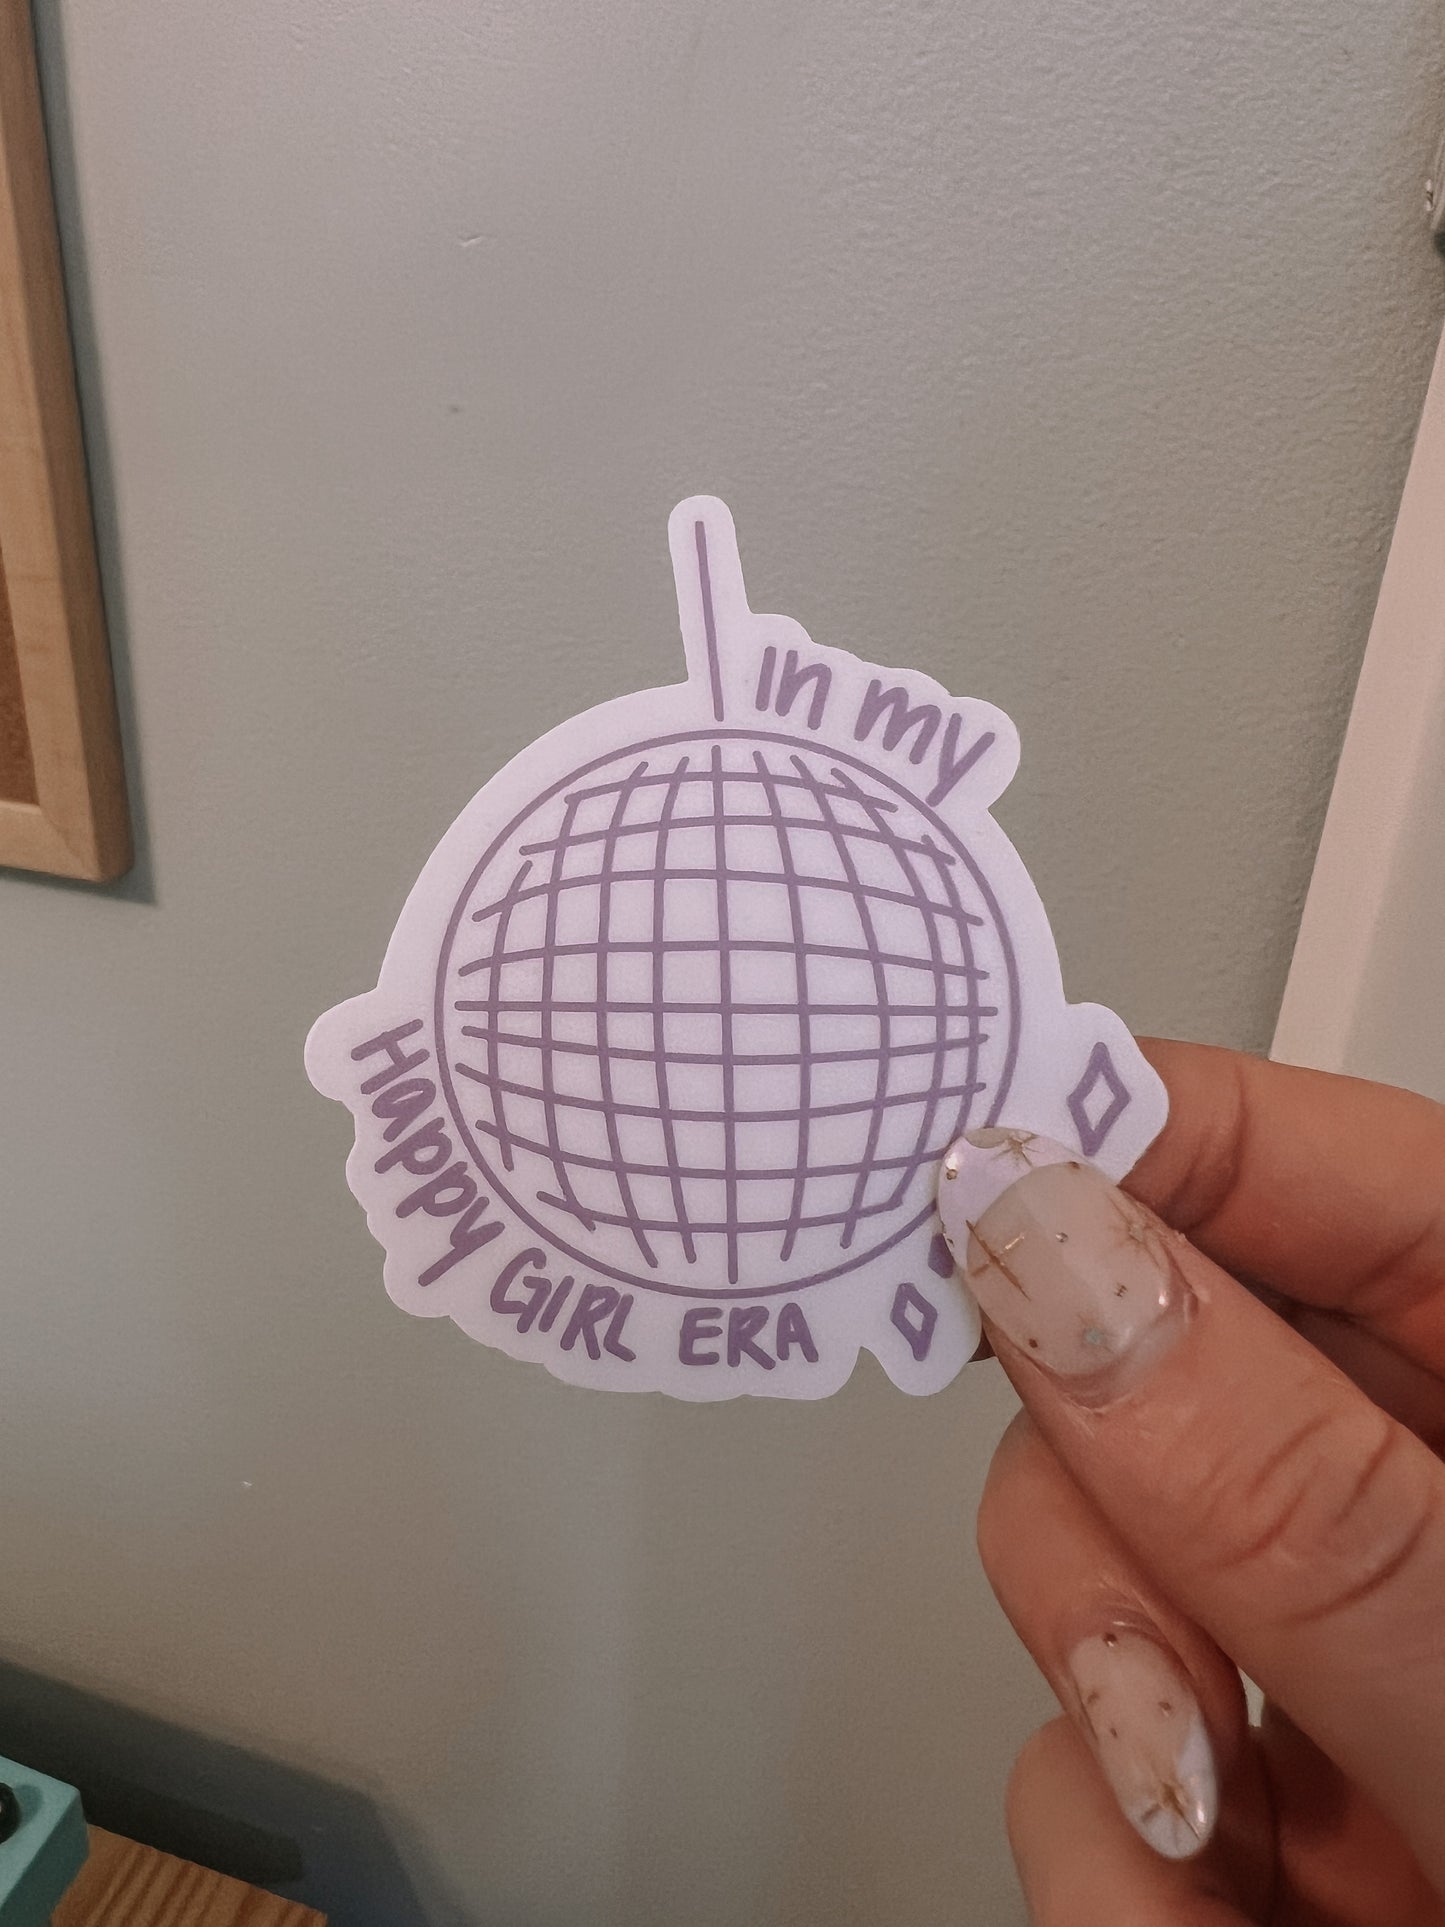 Happy Girl Era W/ Mirrorball Sticker